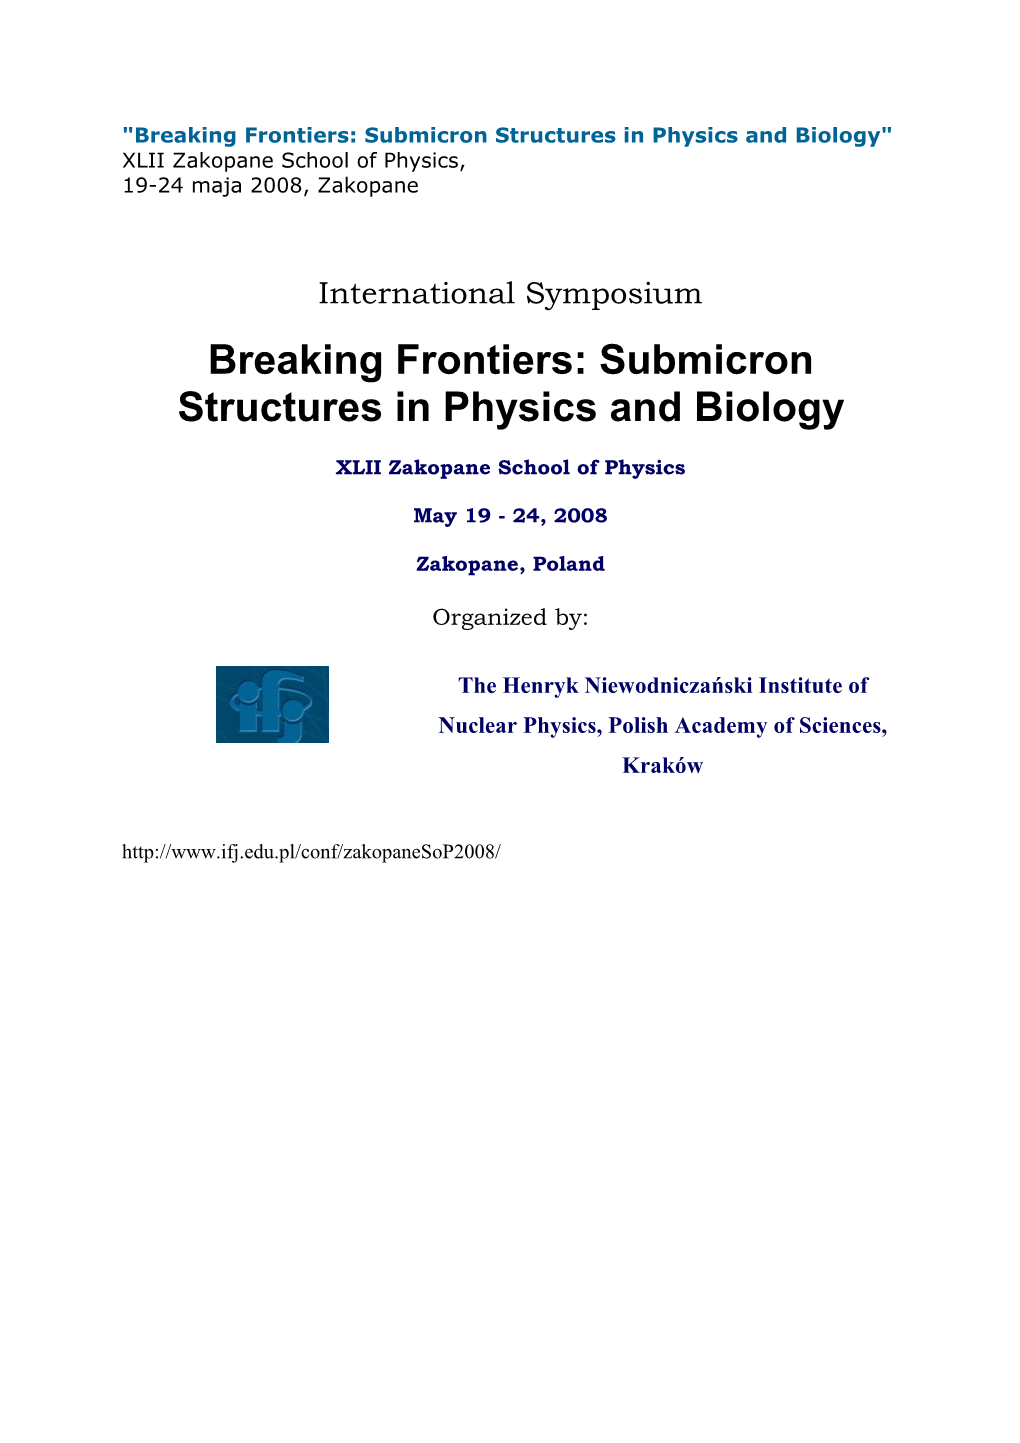 Breaking Frontiers: Submicron Structures in Physics and Biology" XLII Zakopane School of Physics, 19-24 Maja 2008, Zakopane